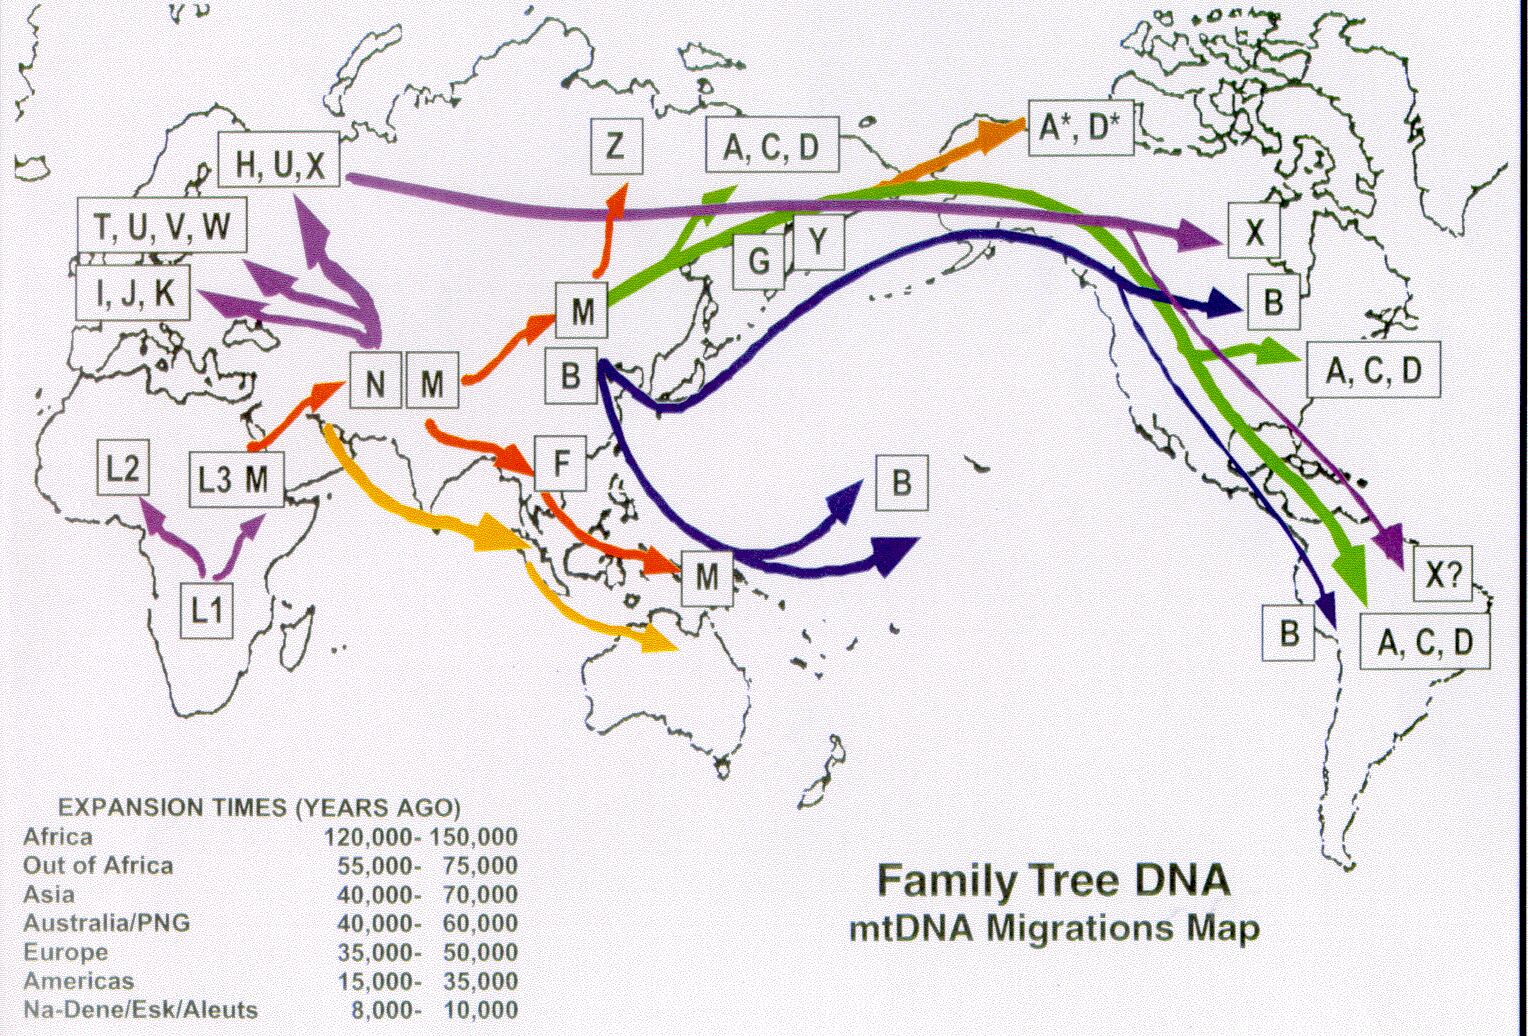 Migration history (1950-2010)